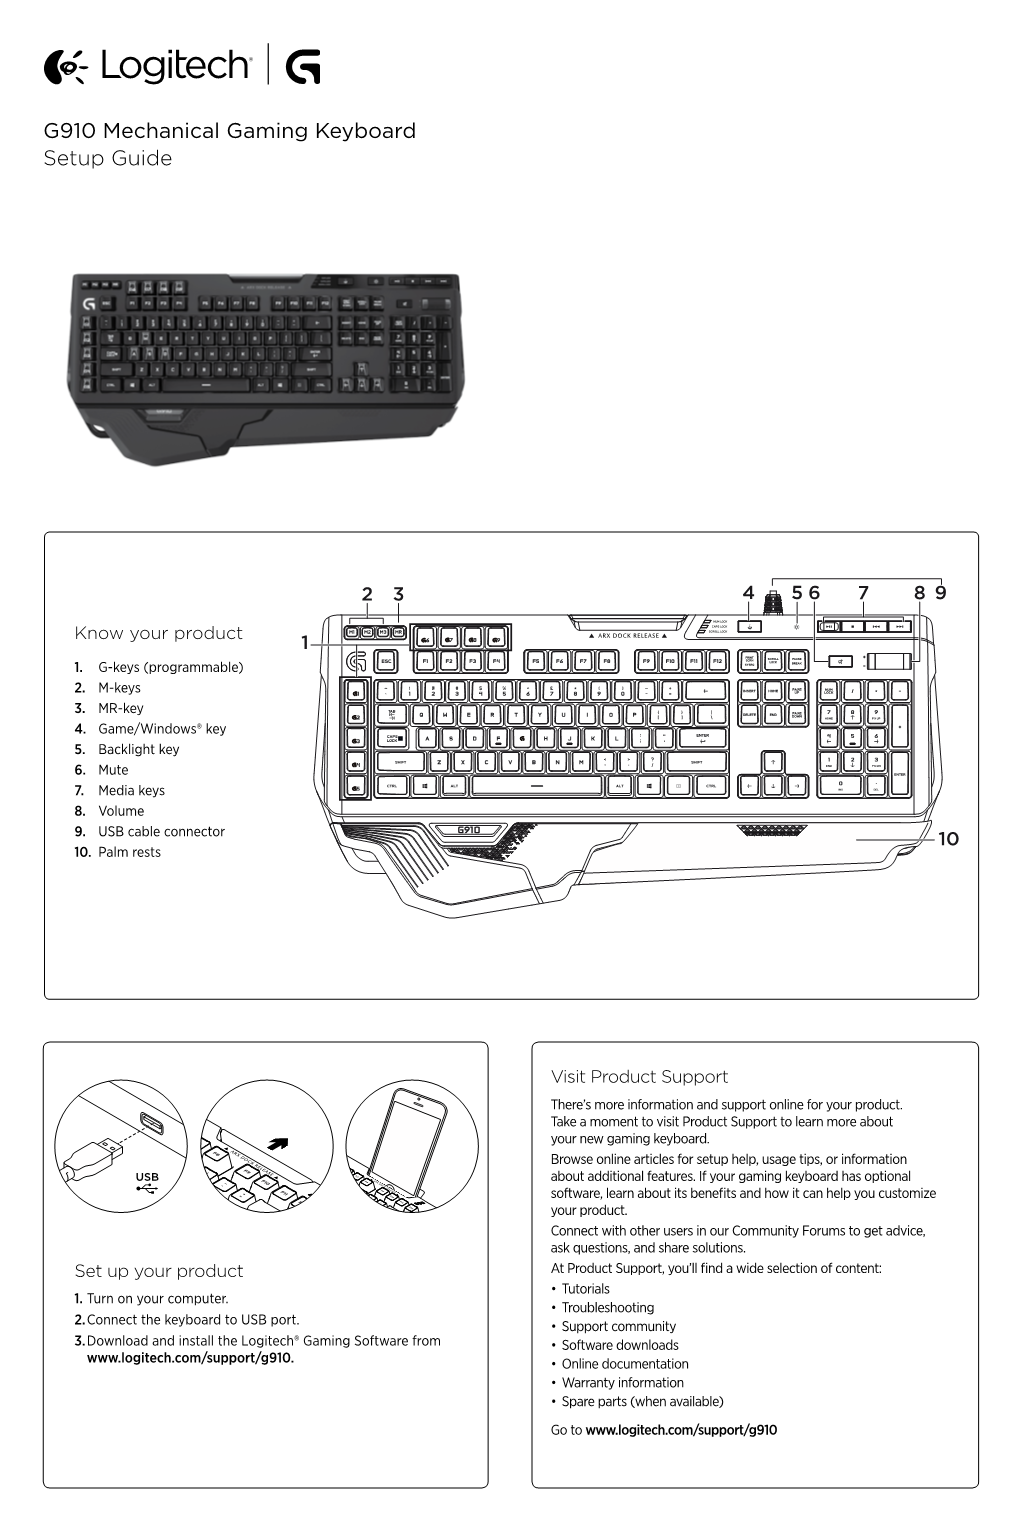 G910 Mechanical Gaming Keyboard Setup Guide